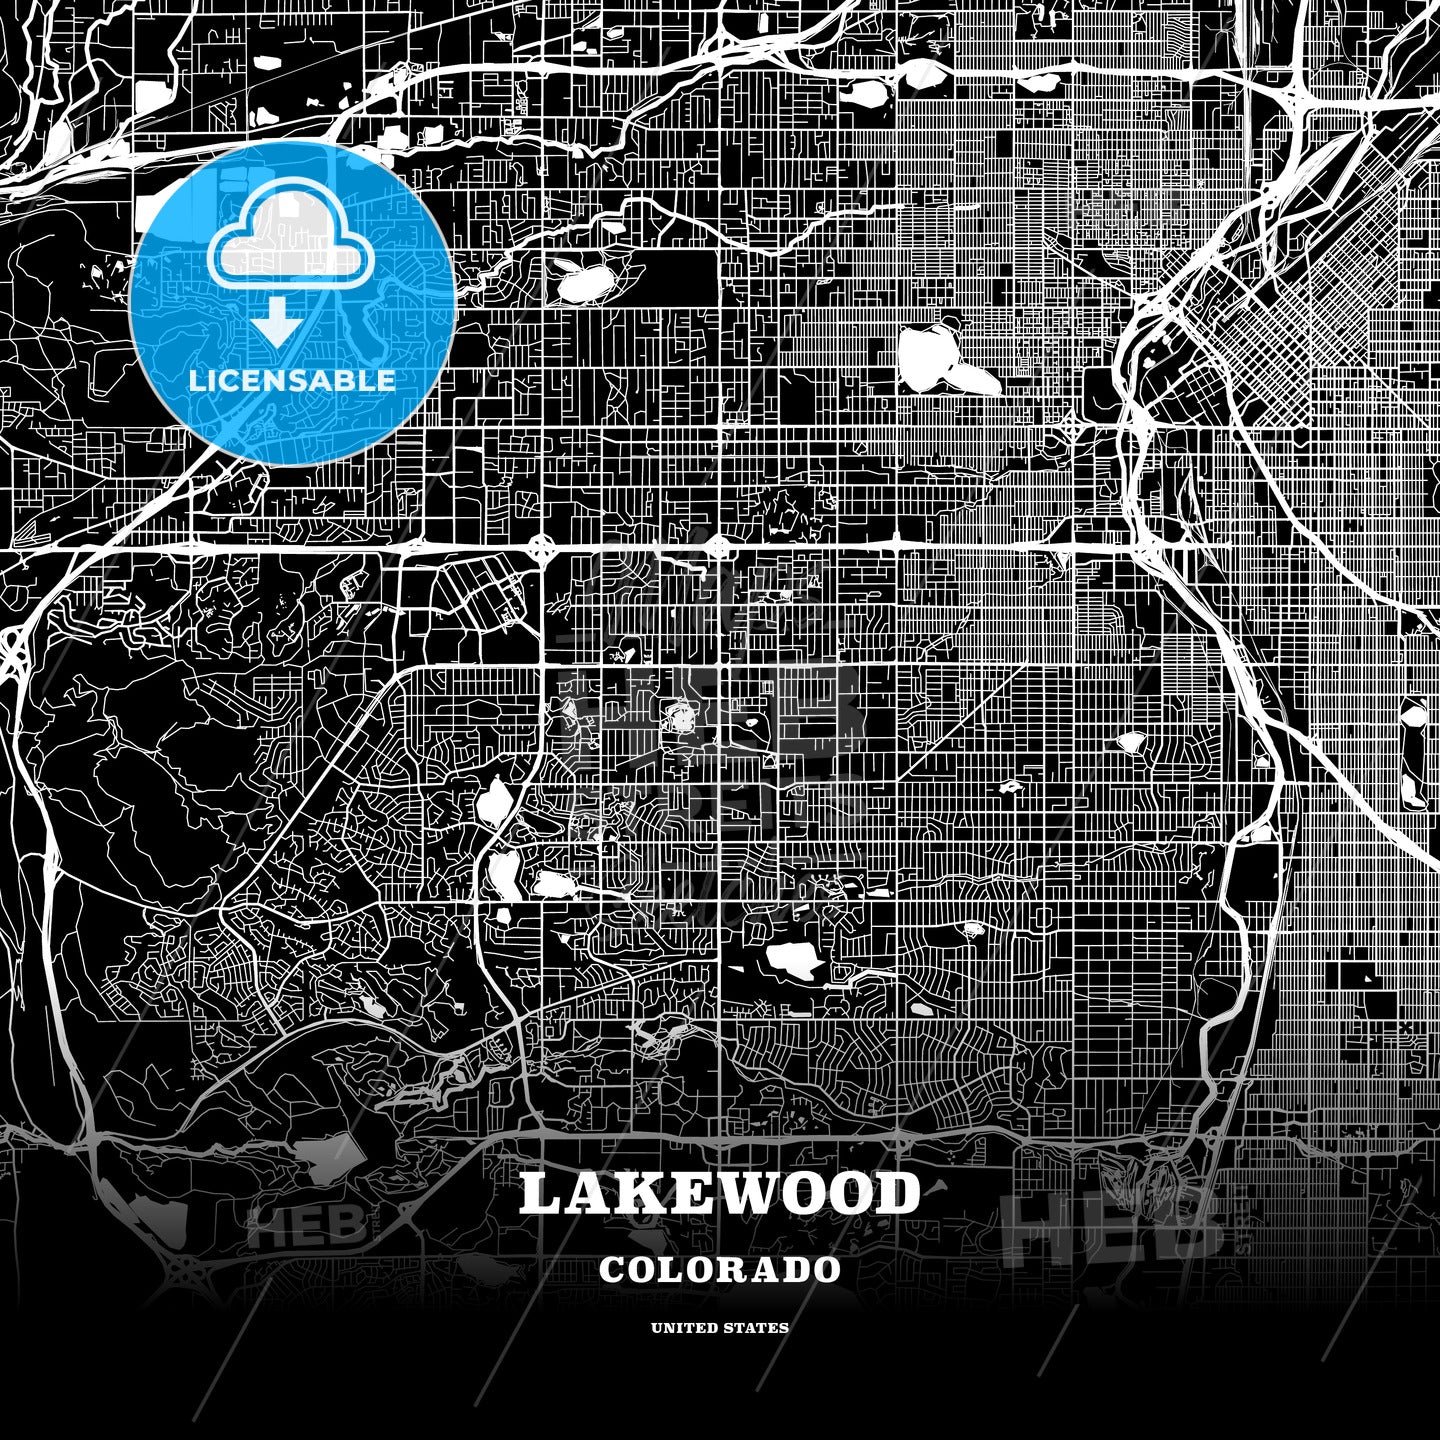 Lakewood, Colorado, USA map